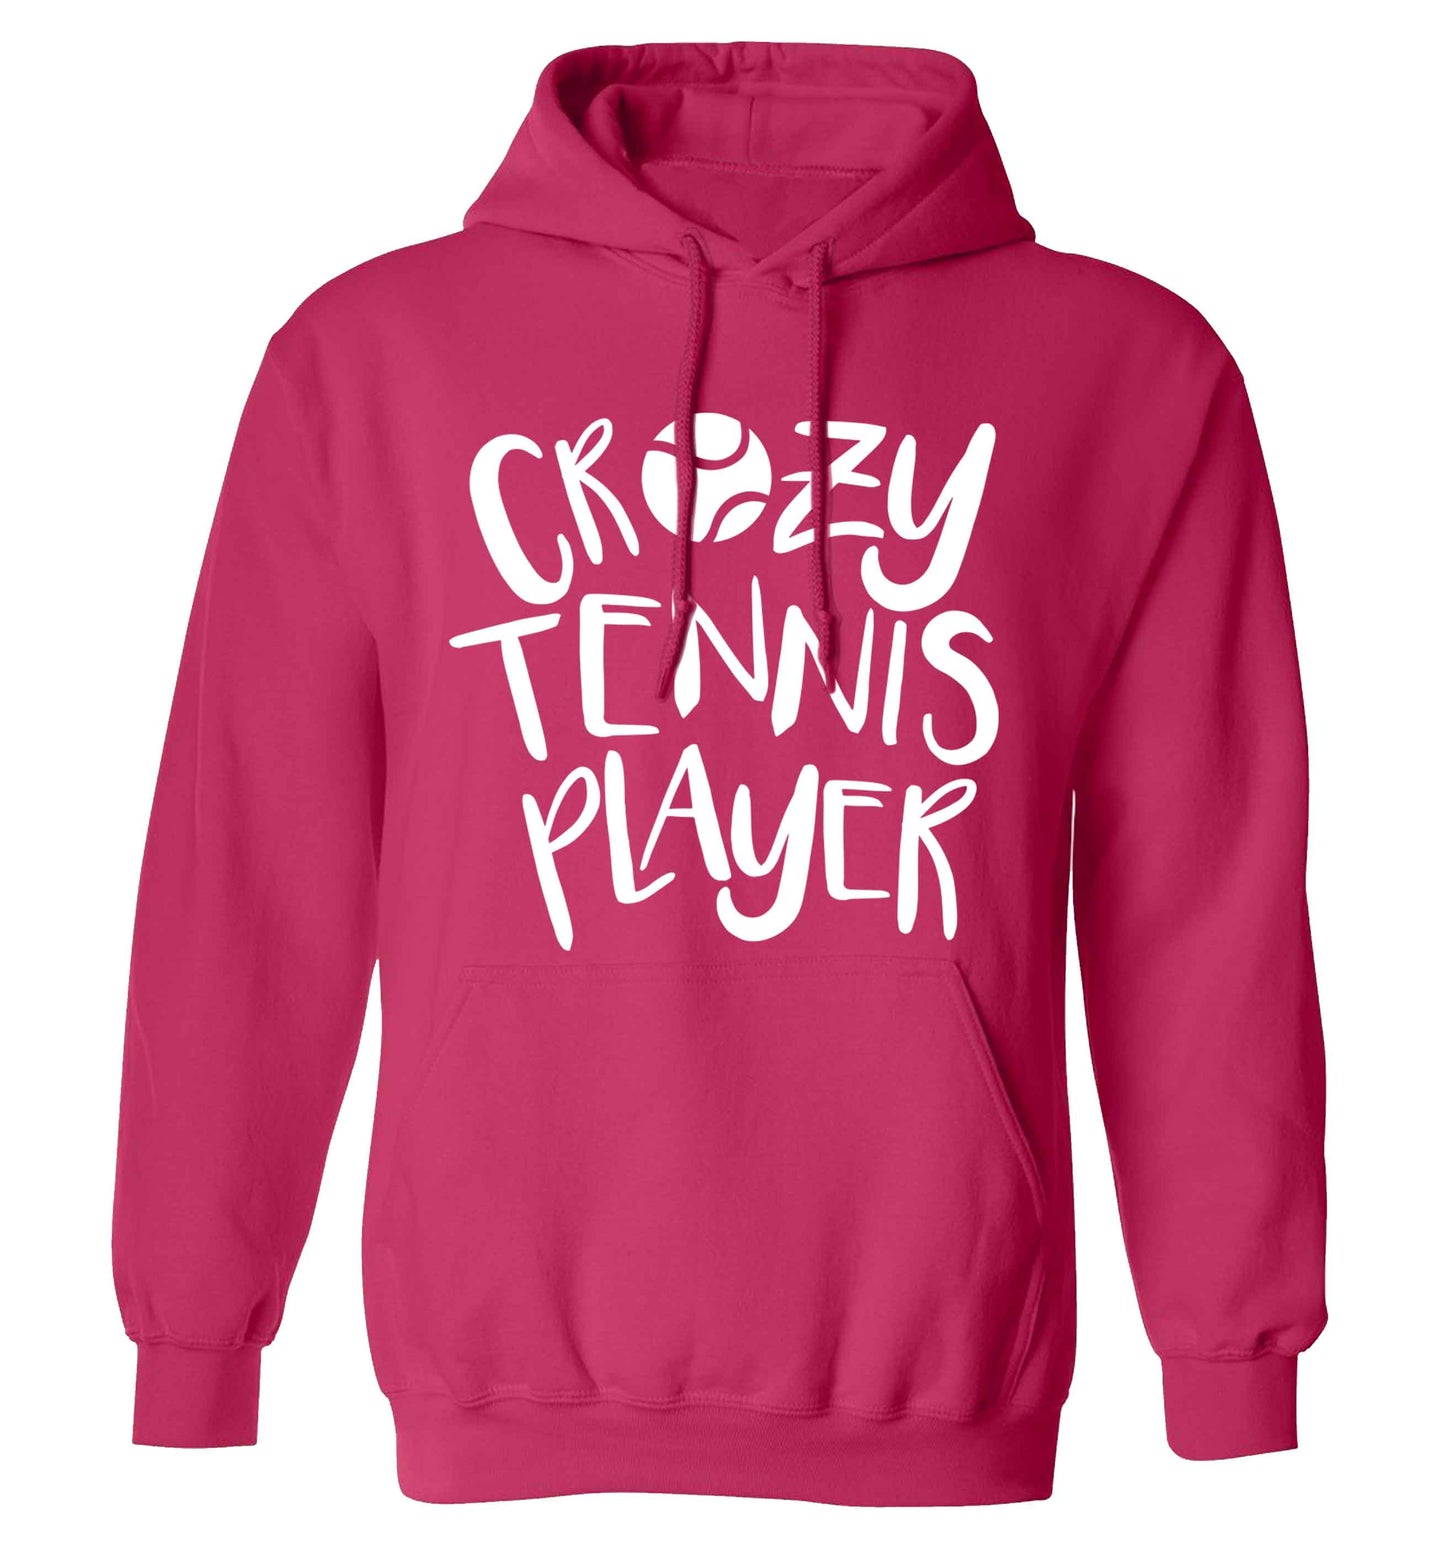 Crazy tennis player adults unisex pink hoodie 2XL